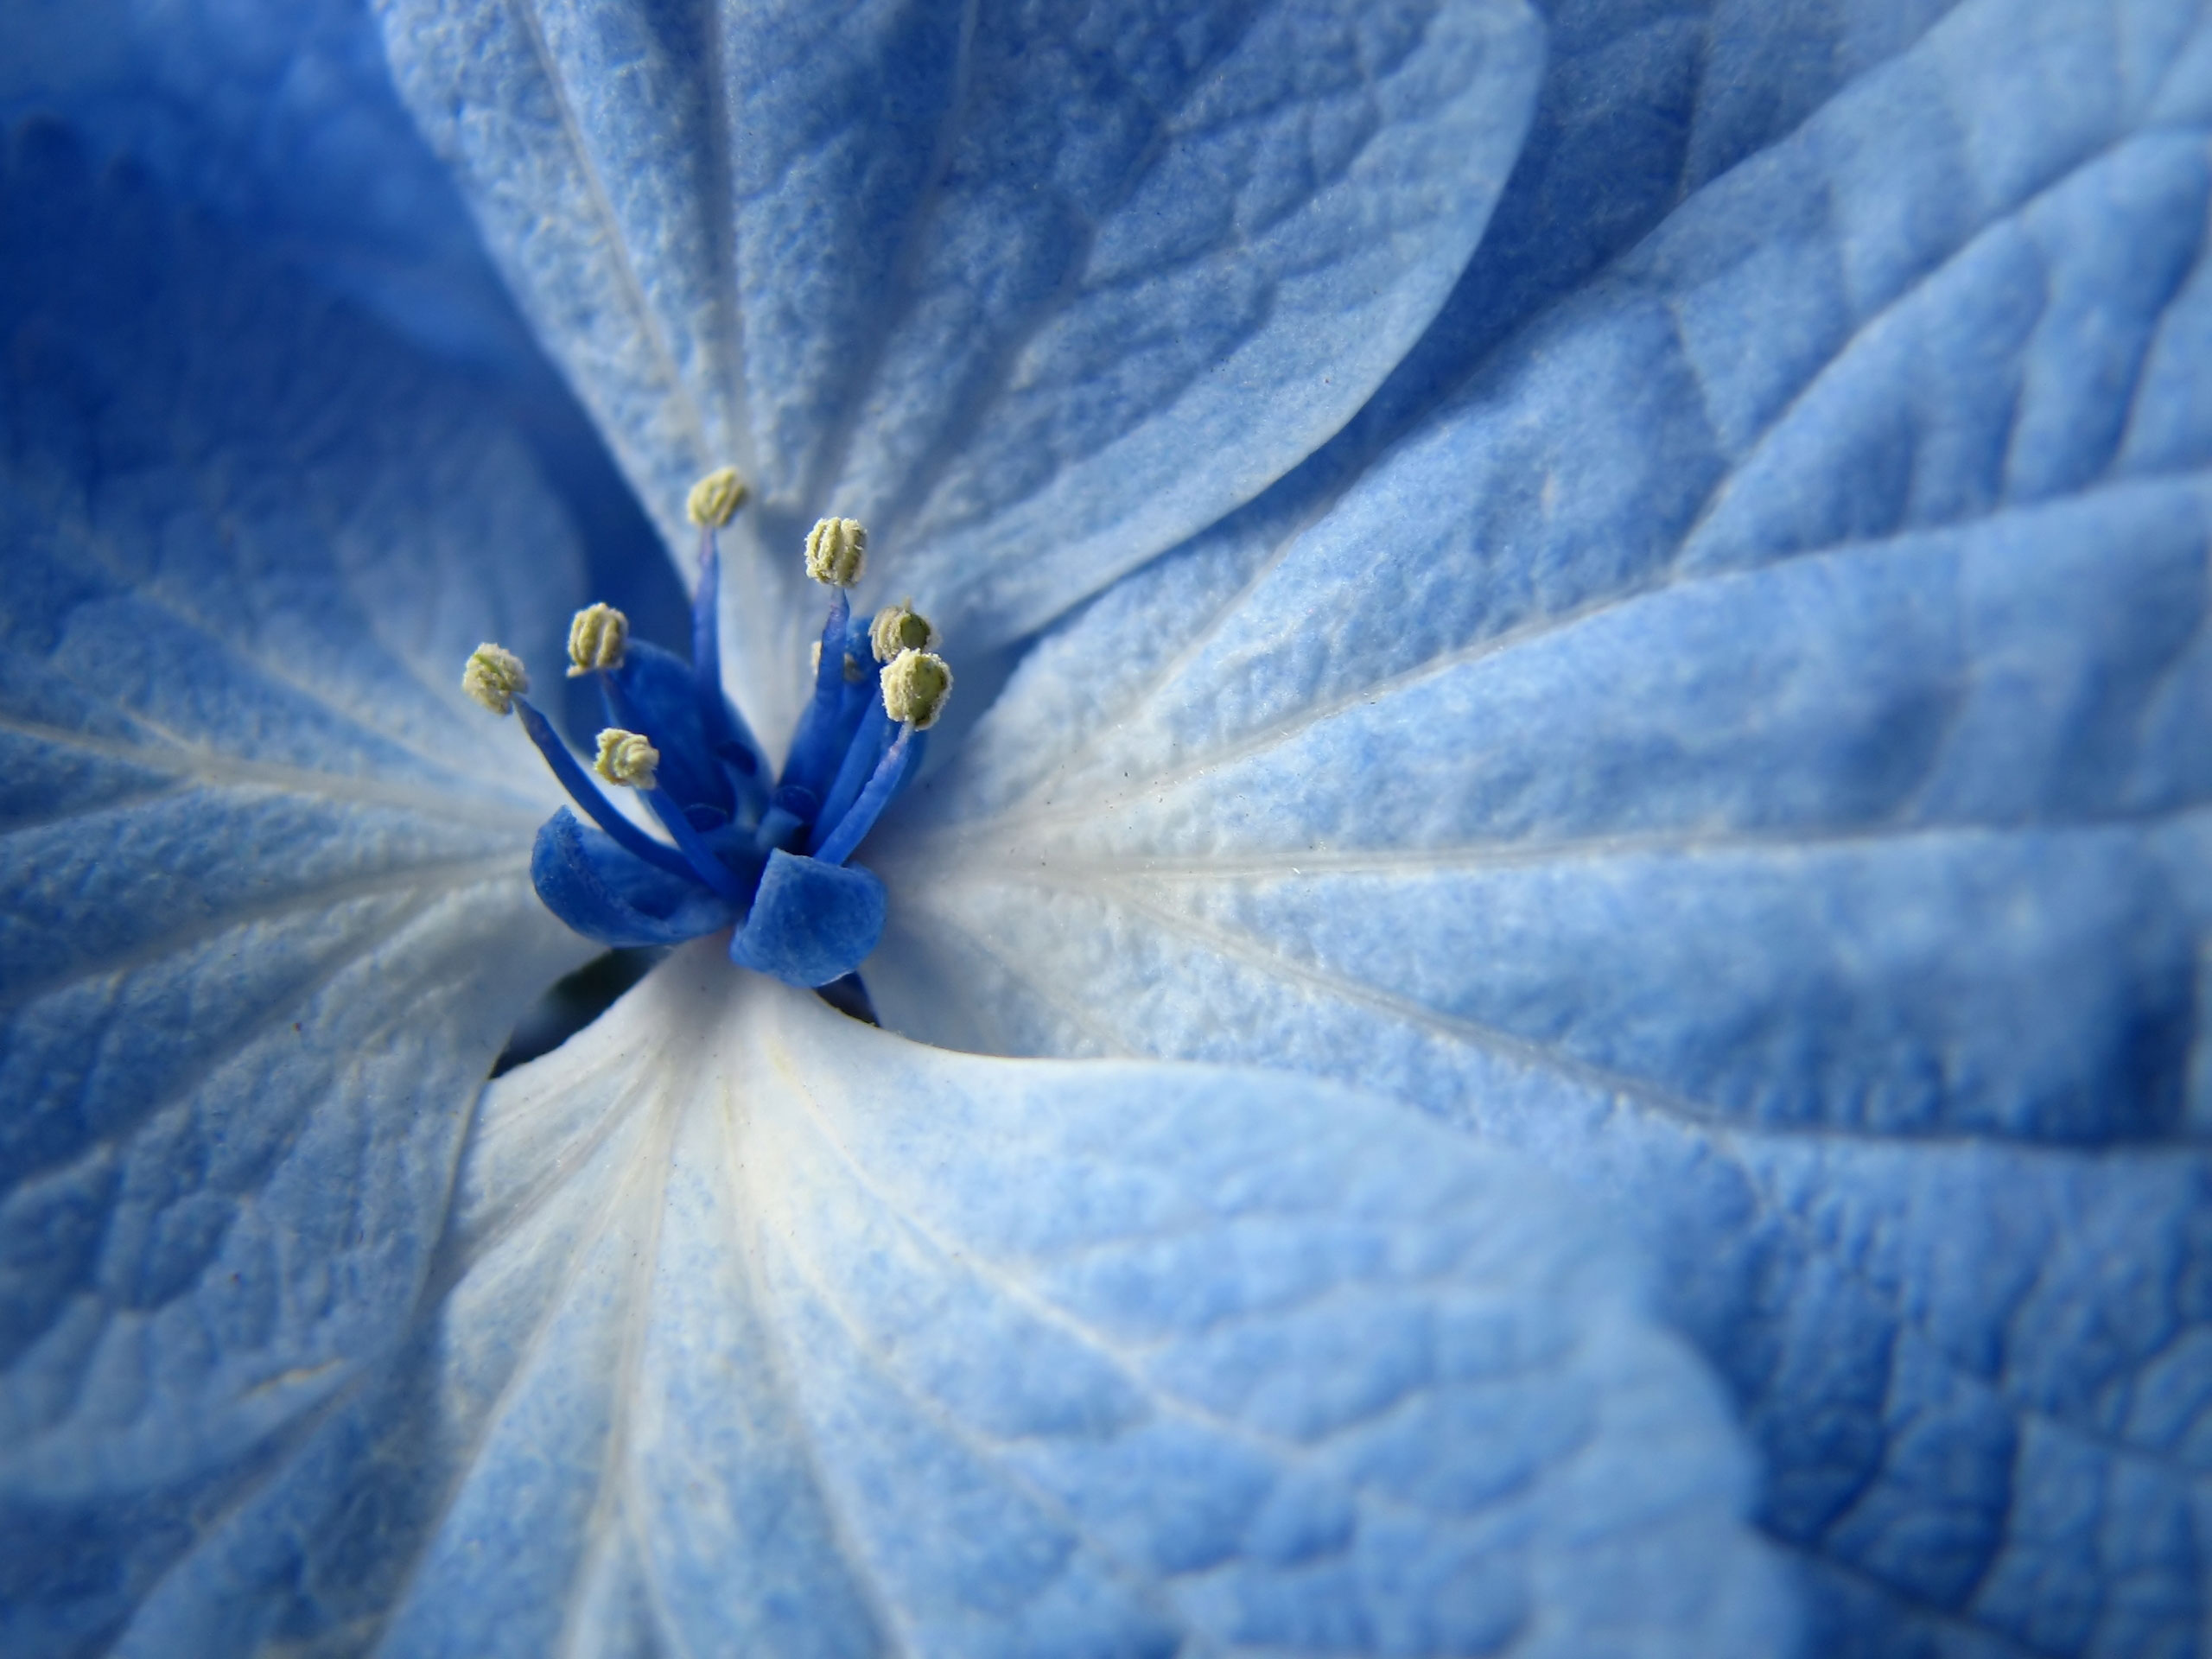 Light Blue Flower Wallpaper - WallpaperSafari